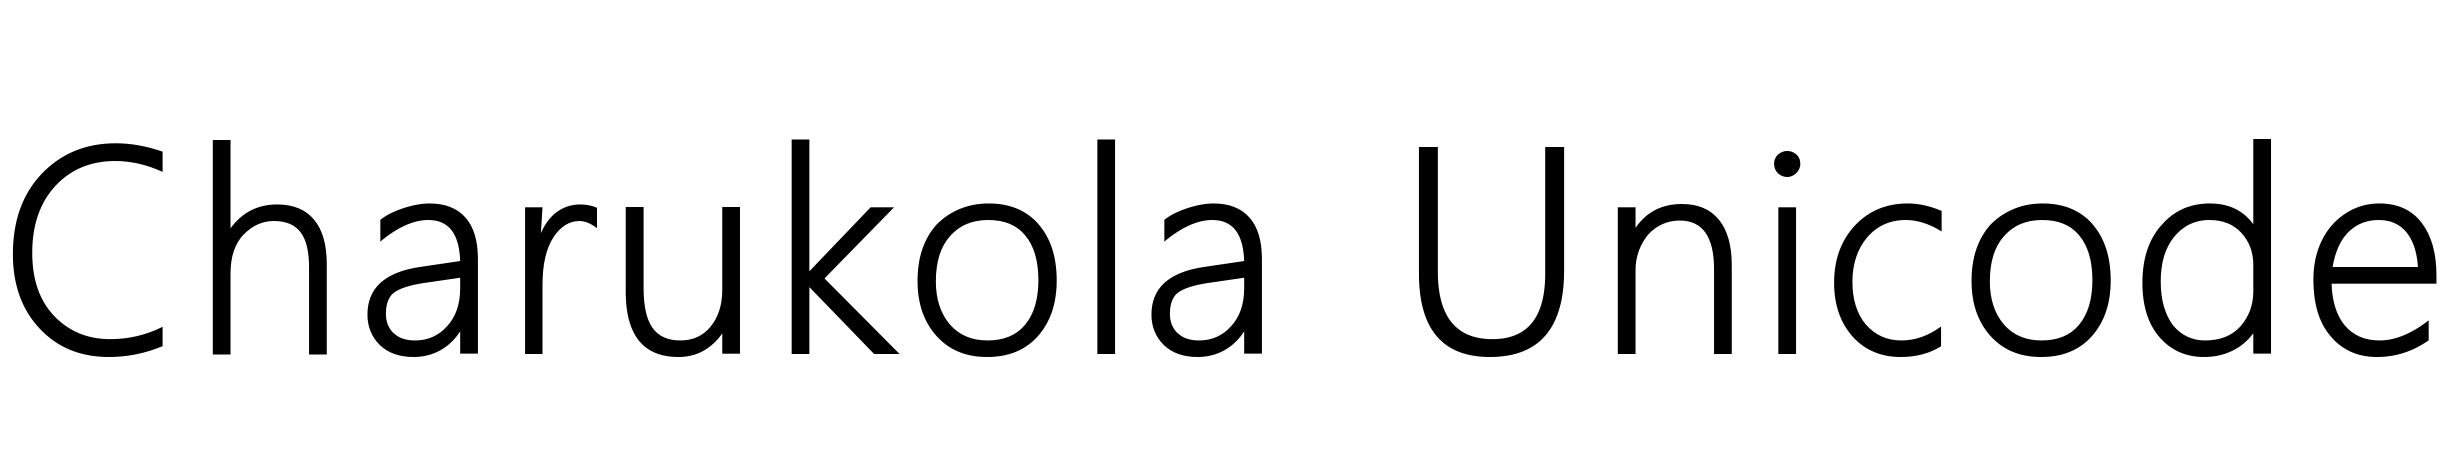 Font Charukola Unicode